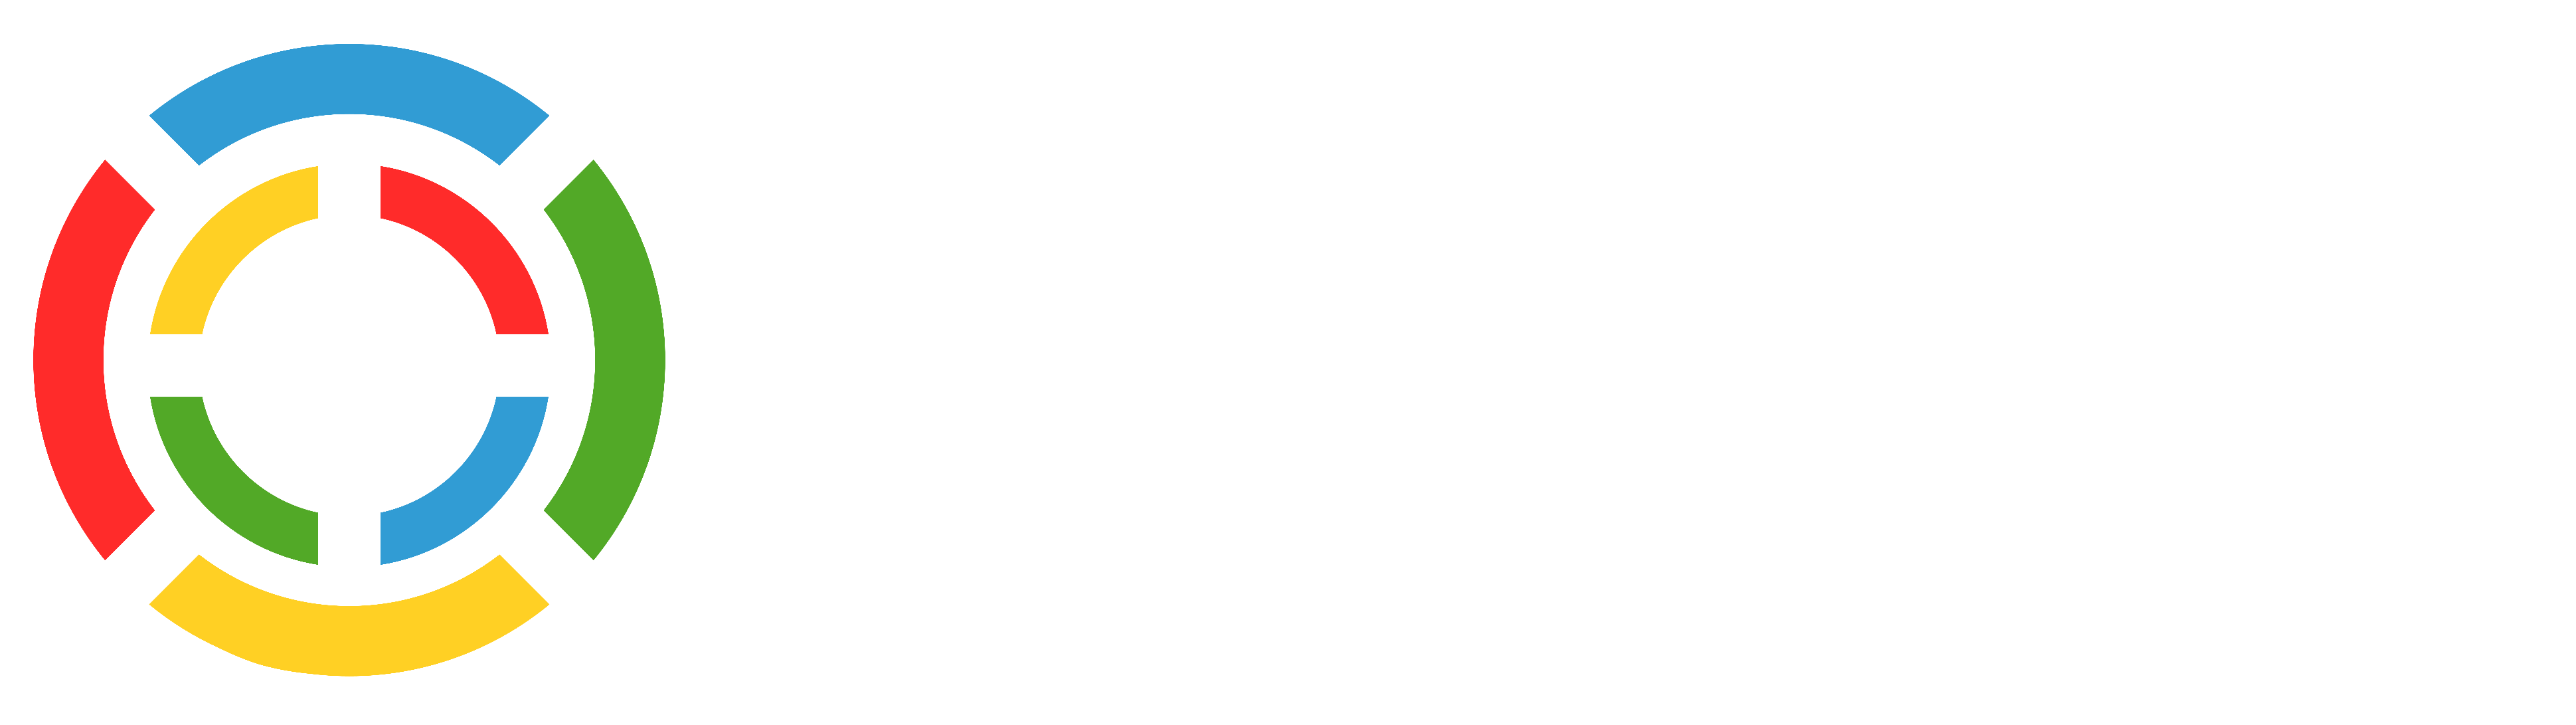 SPINSystem Logo